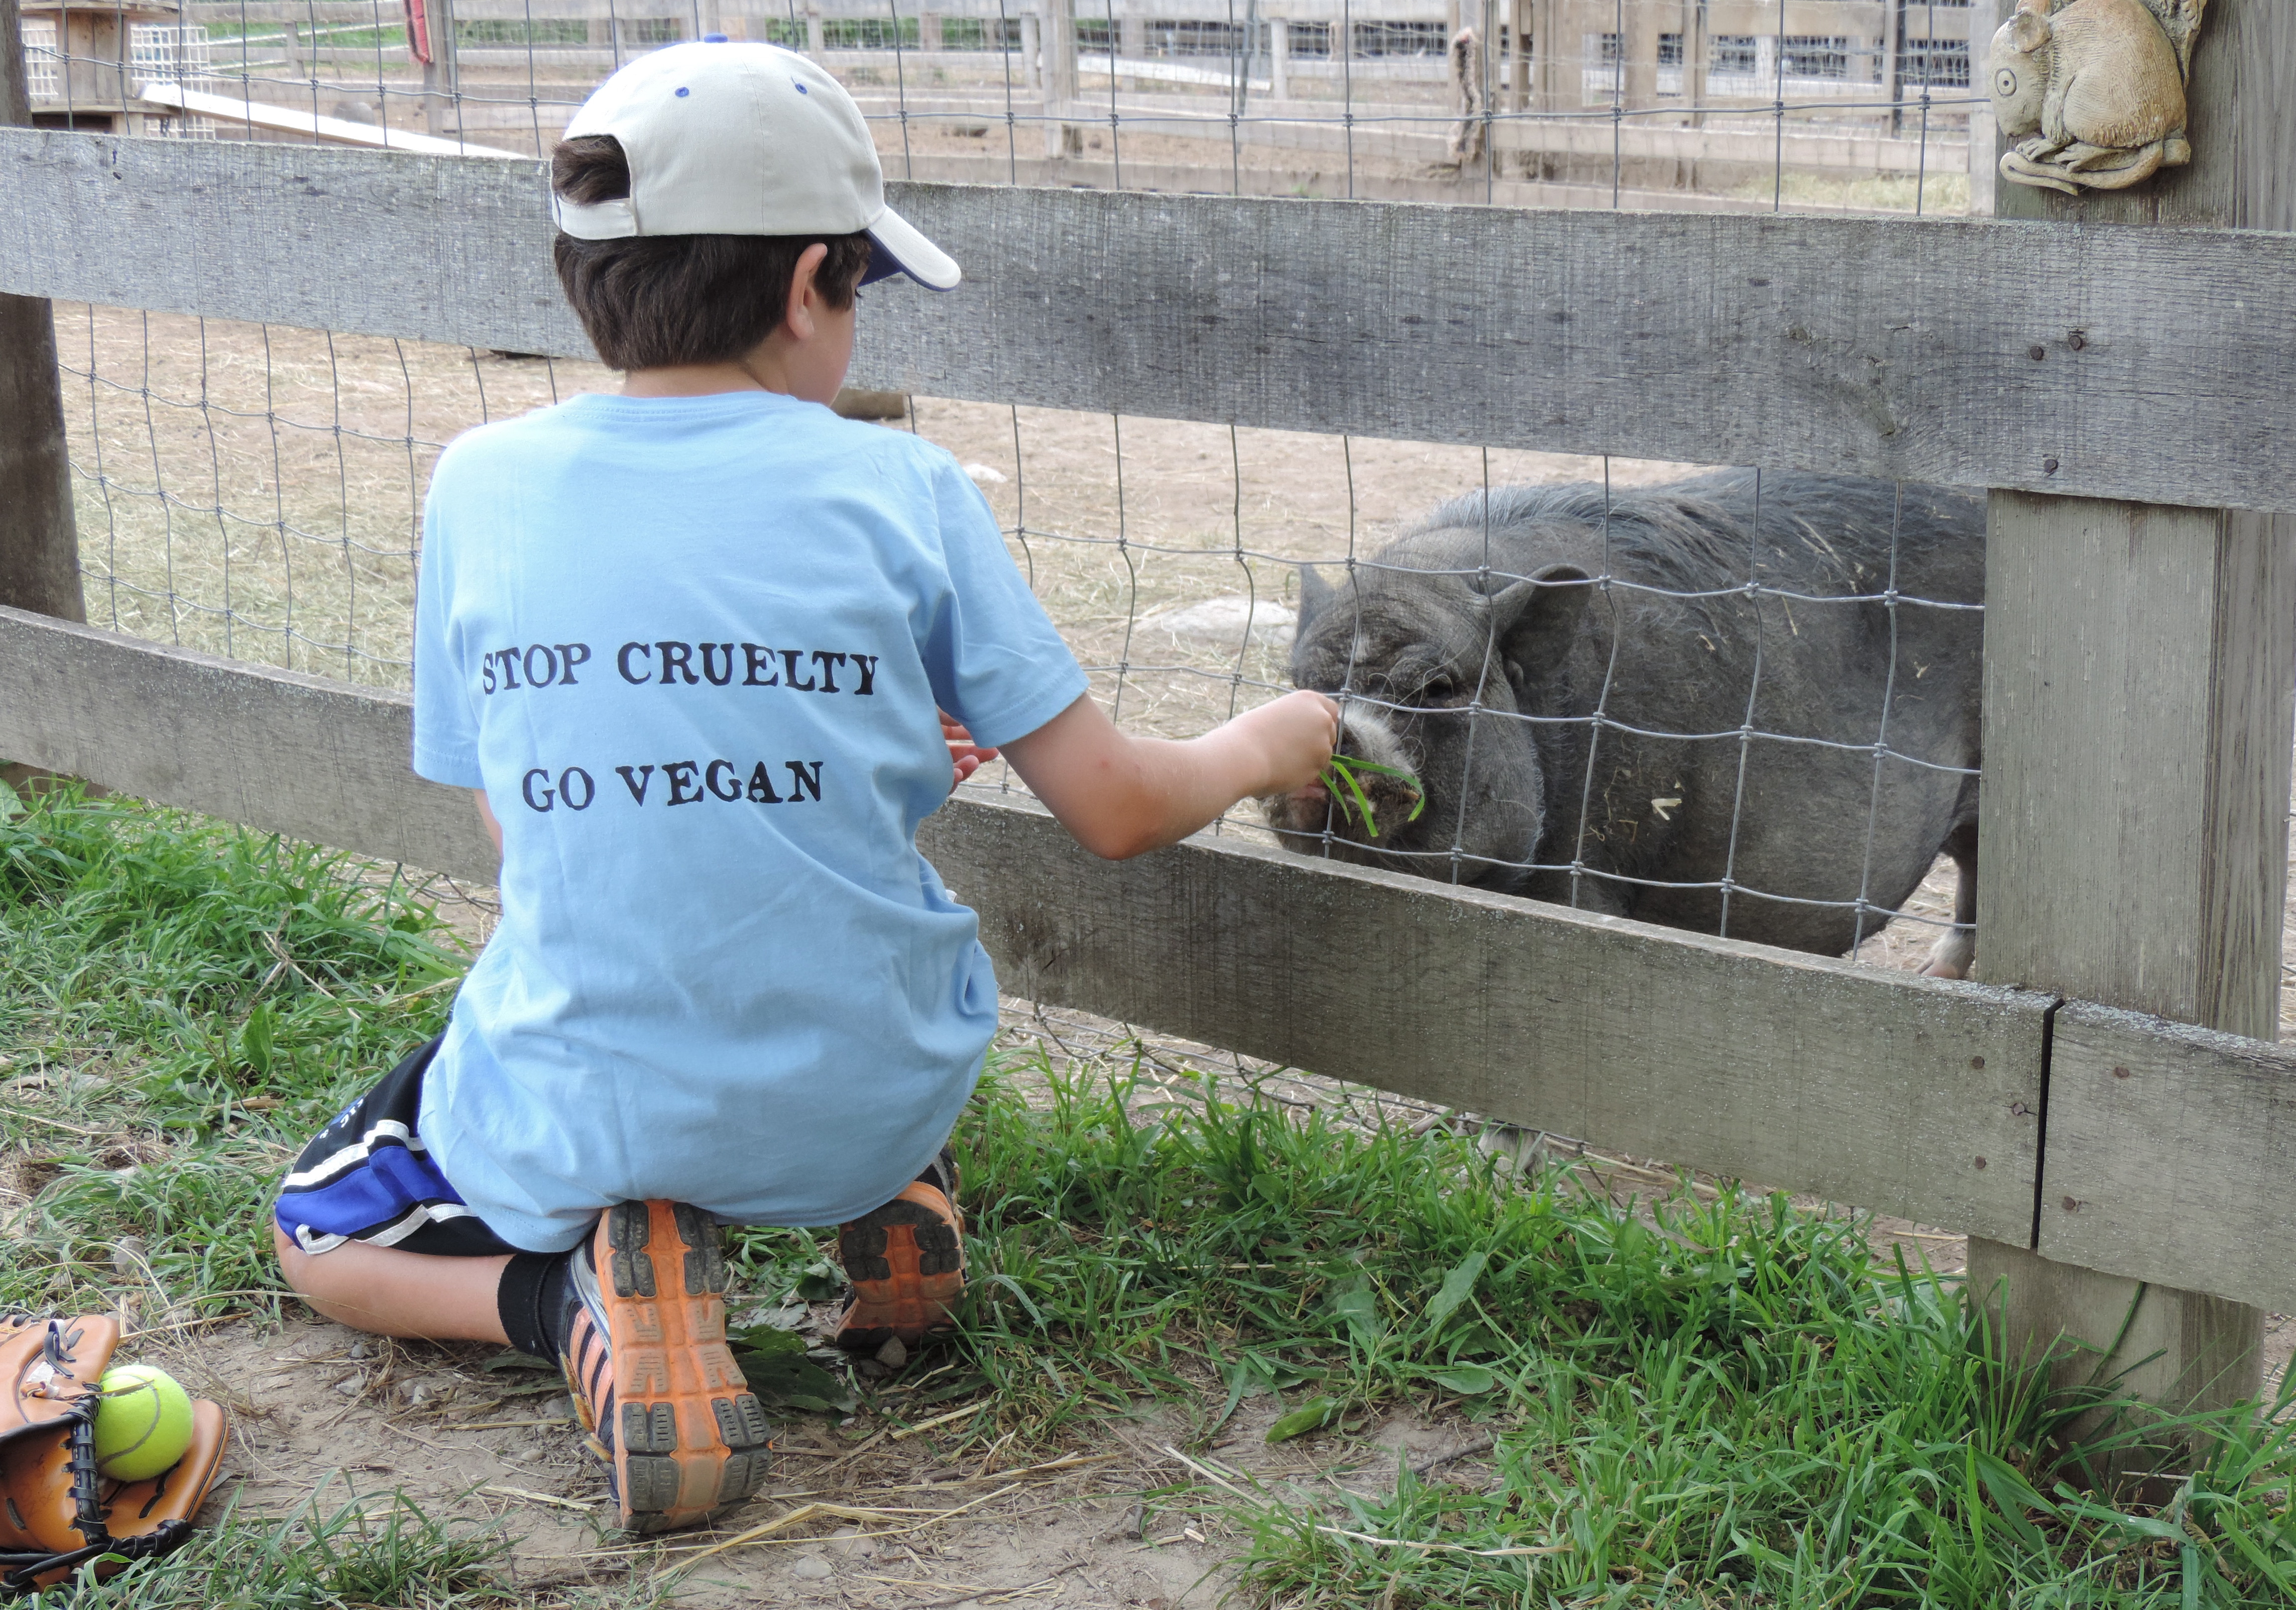 Noah feeding piggie with vegan shirt